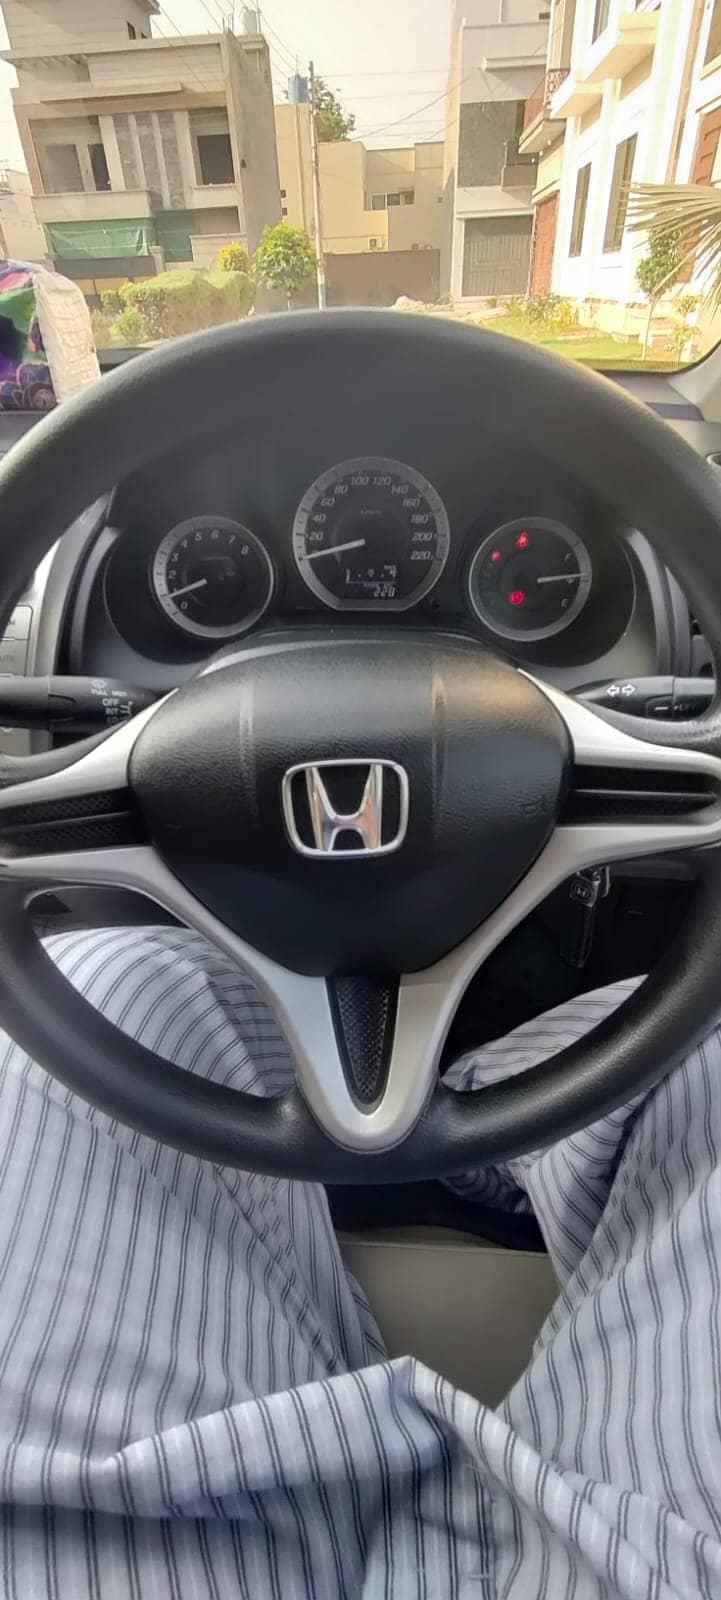 Honda City Aspire Auto Prosmatec 1.5 i-VTEC 2015 Model Mint Condition 4